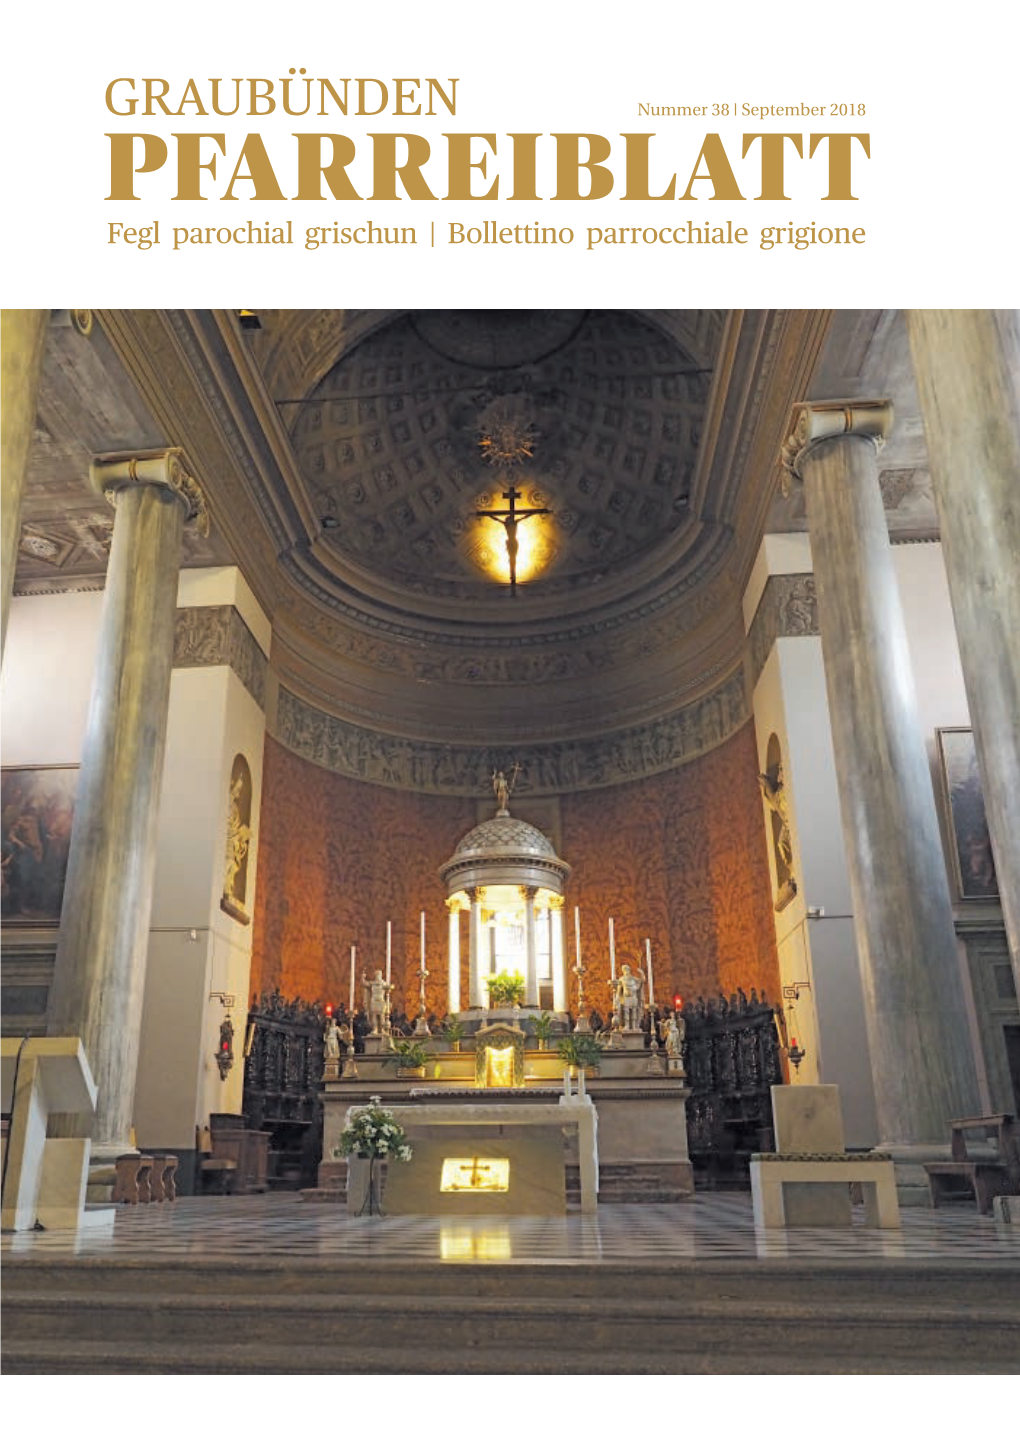 Pfarreiblatt Fegl Parochial Grischun | Bollettino Parrocchiale Grigione 2 Pfarreiblatt Graubünden | September 2018